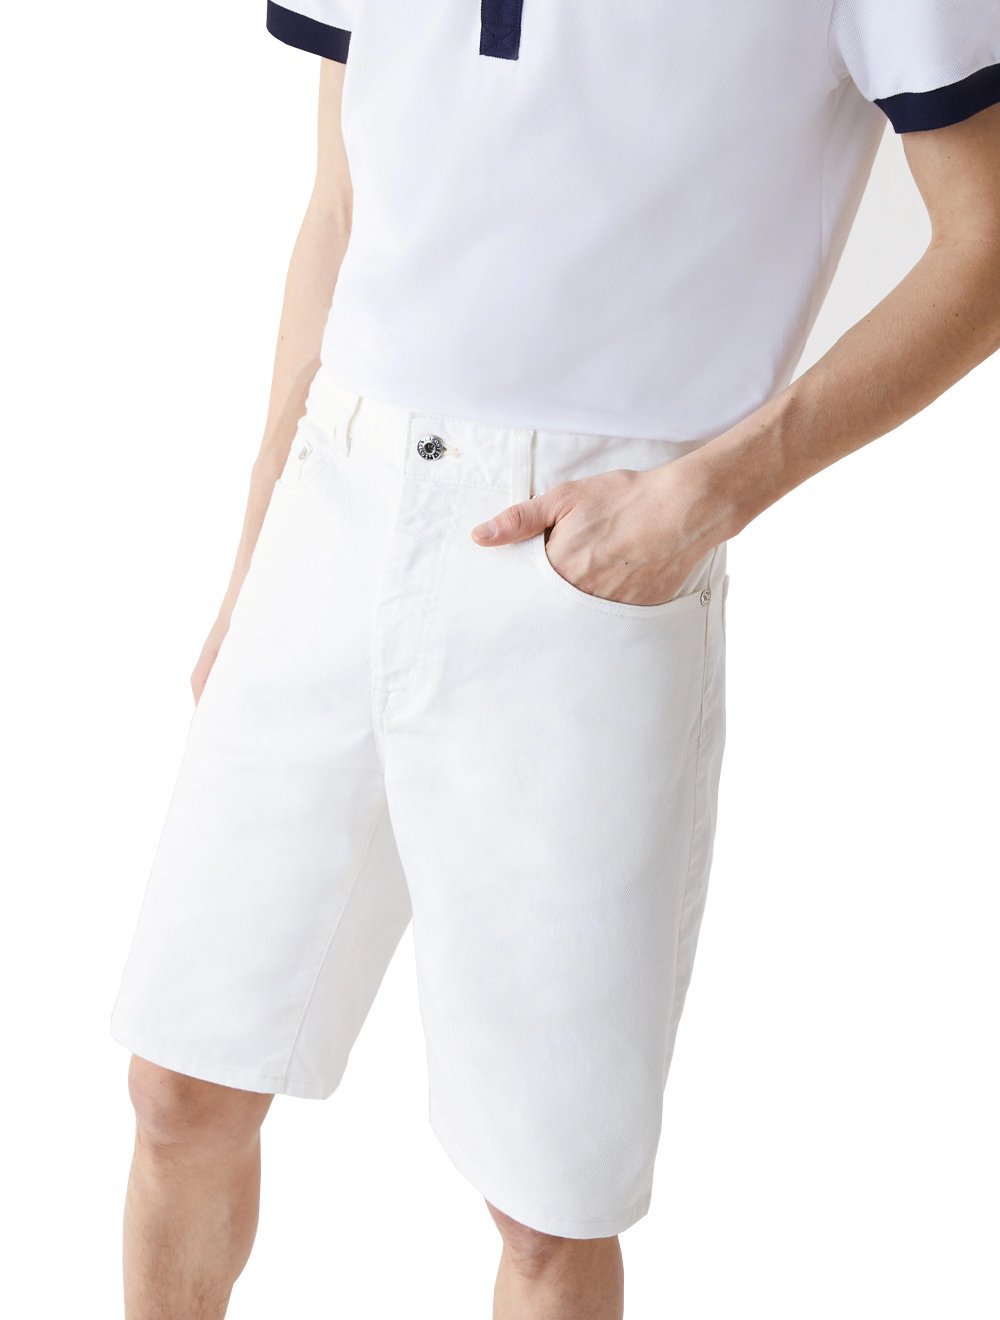 Bermuda Lacoste Masculina Jeans Essential Cotton Branca